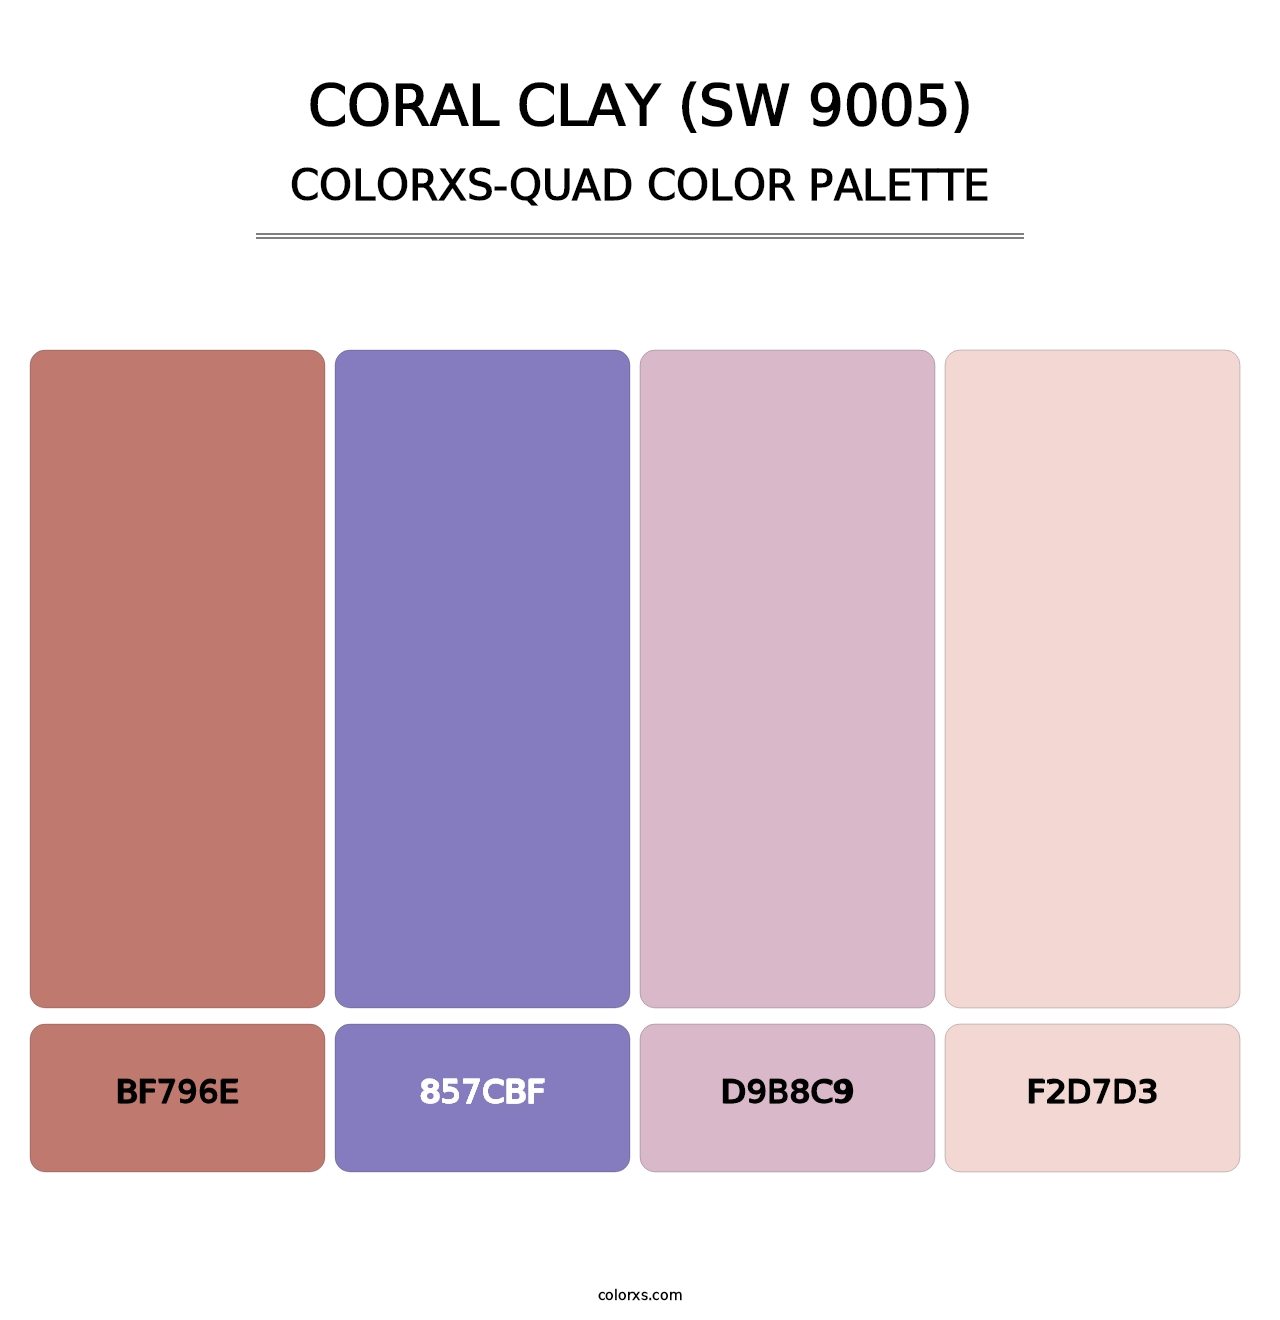 Coral Clay (SW 9005) - Colorxs Quad Palette